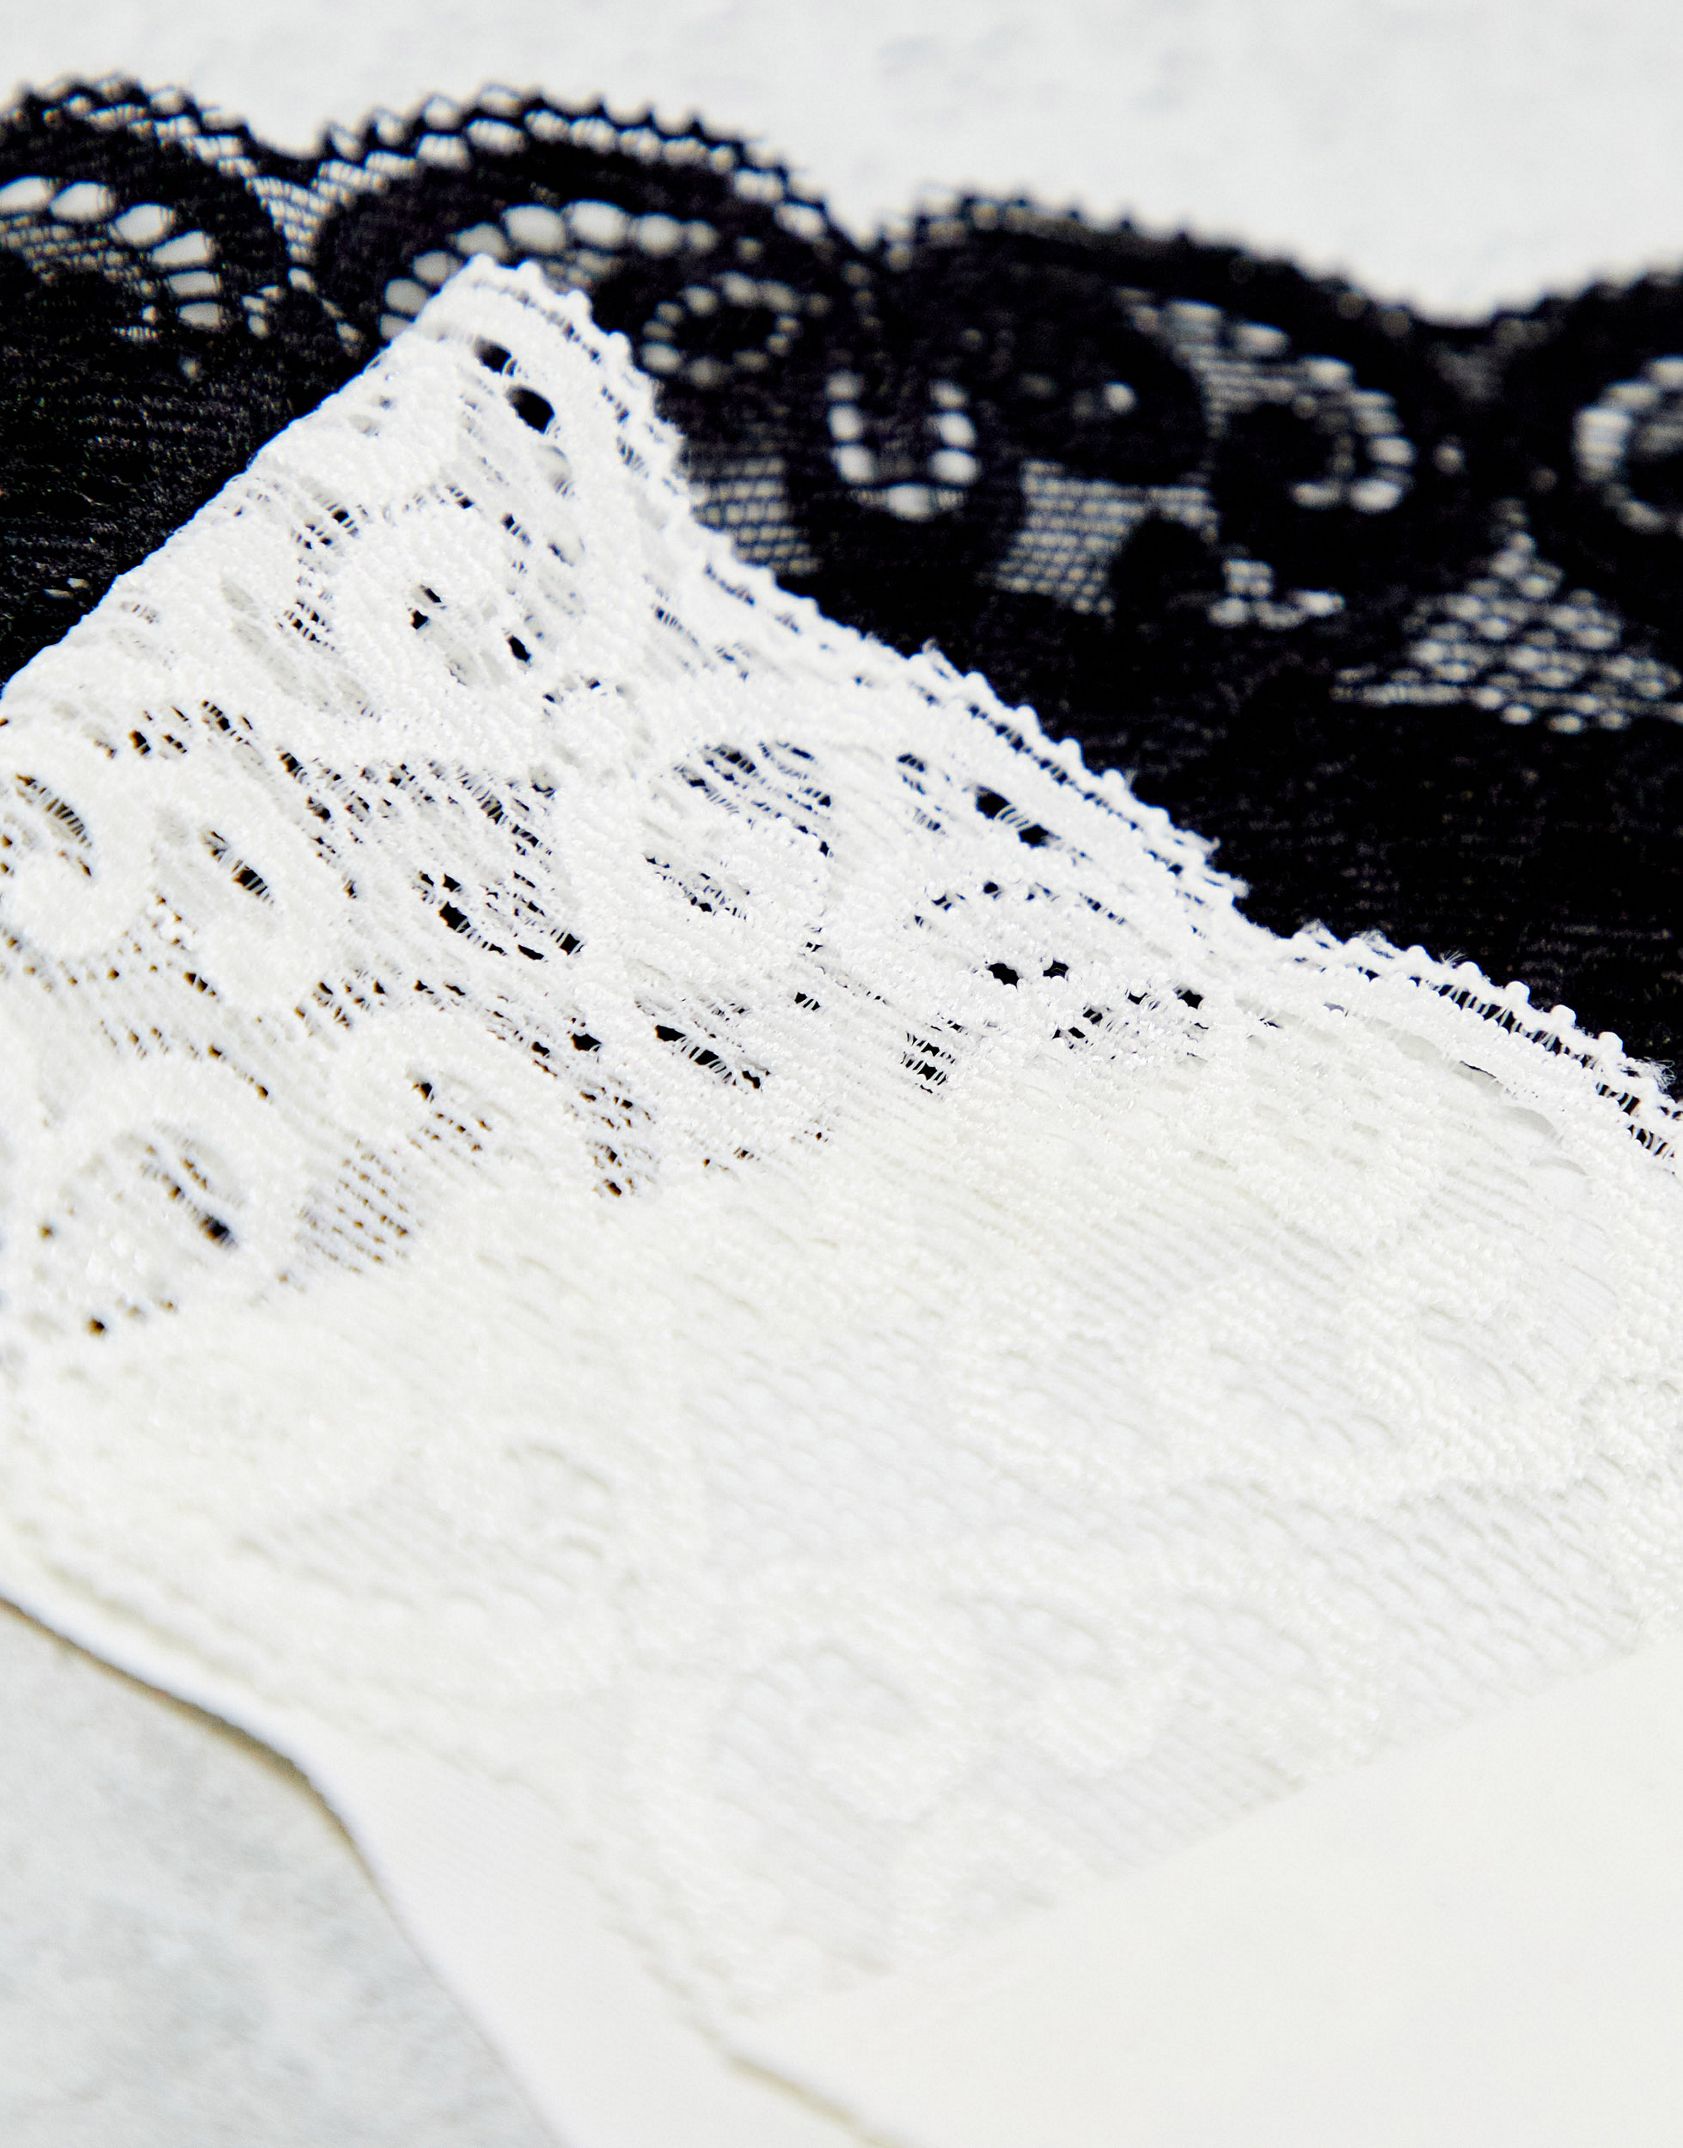 Cotton:On 5-pack lace insert brasiliano briefs in multi -  Price Checker